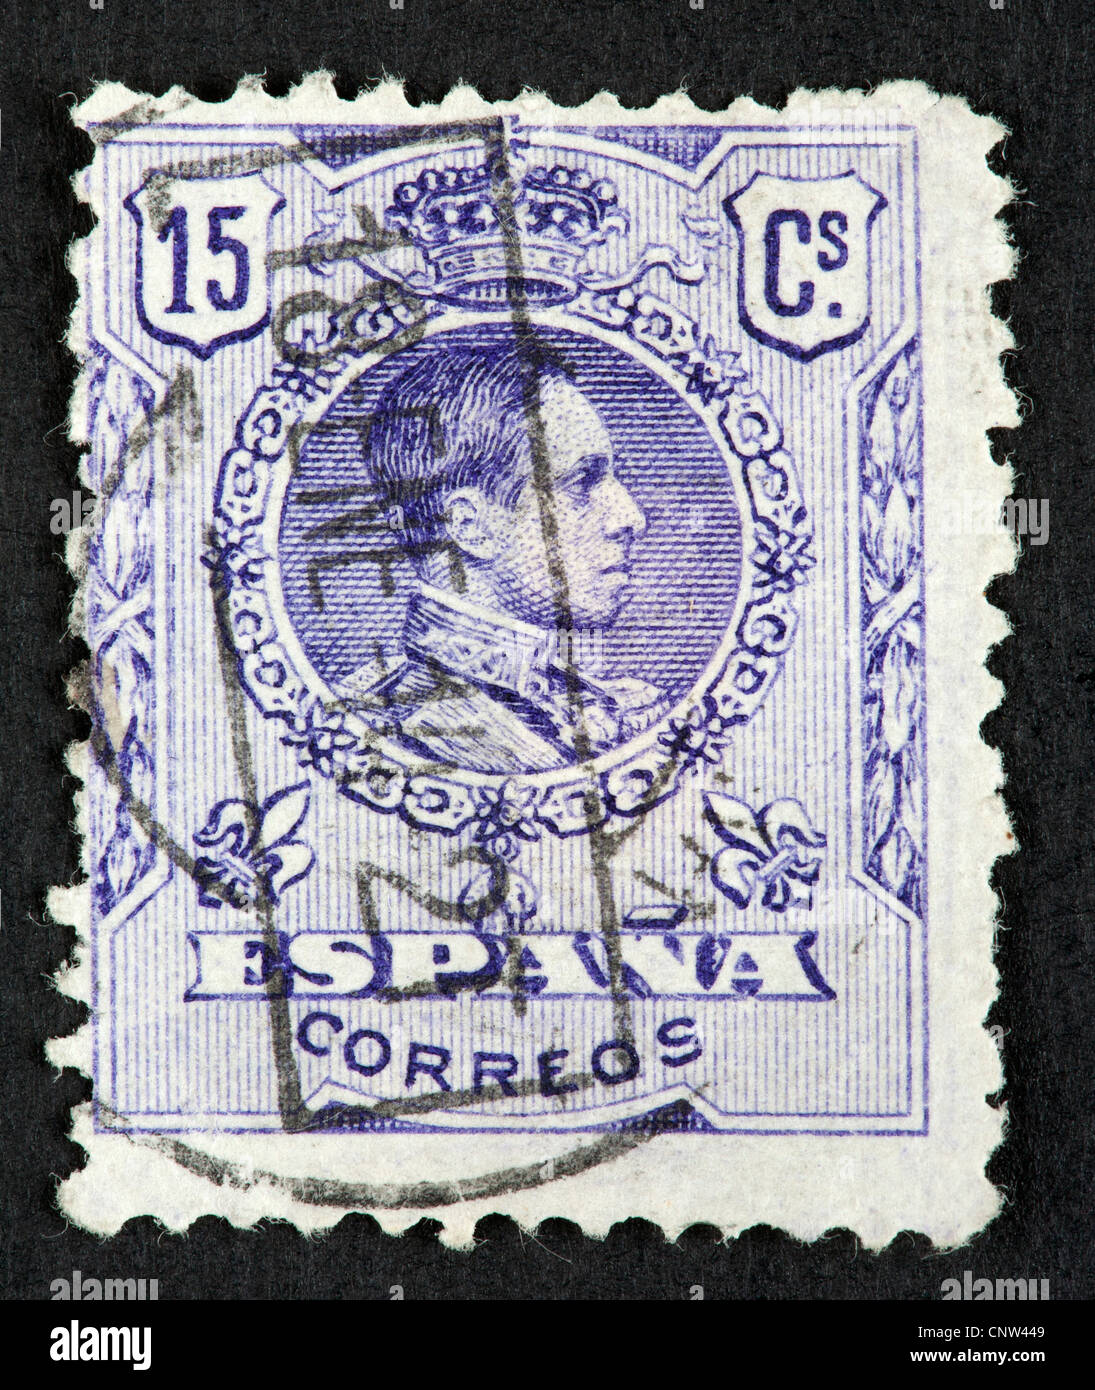 Spanish postage stamp Stock Photo